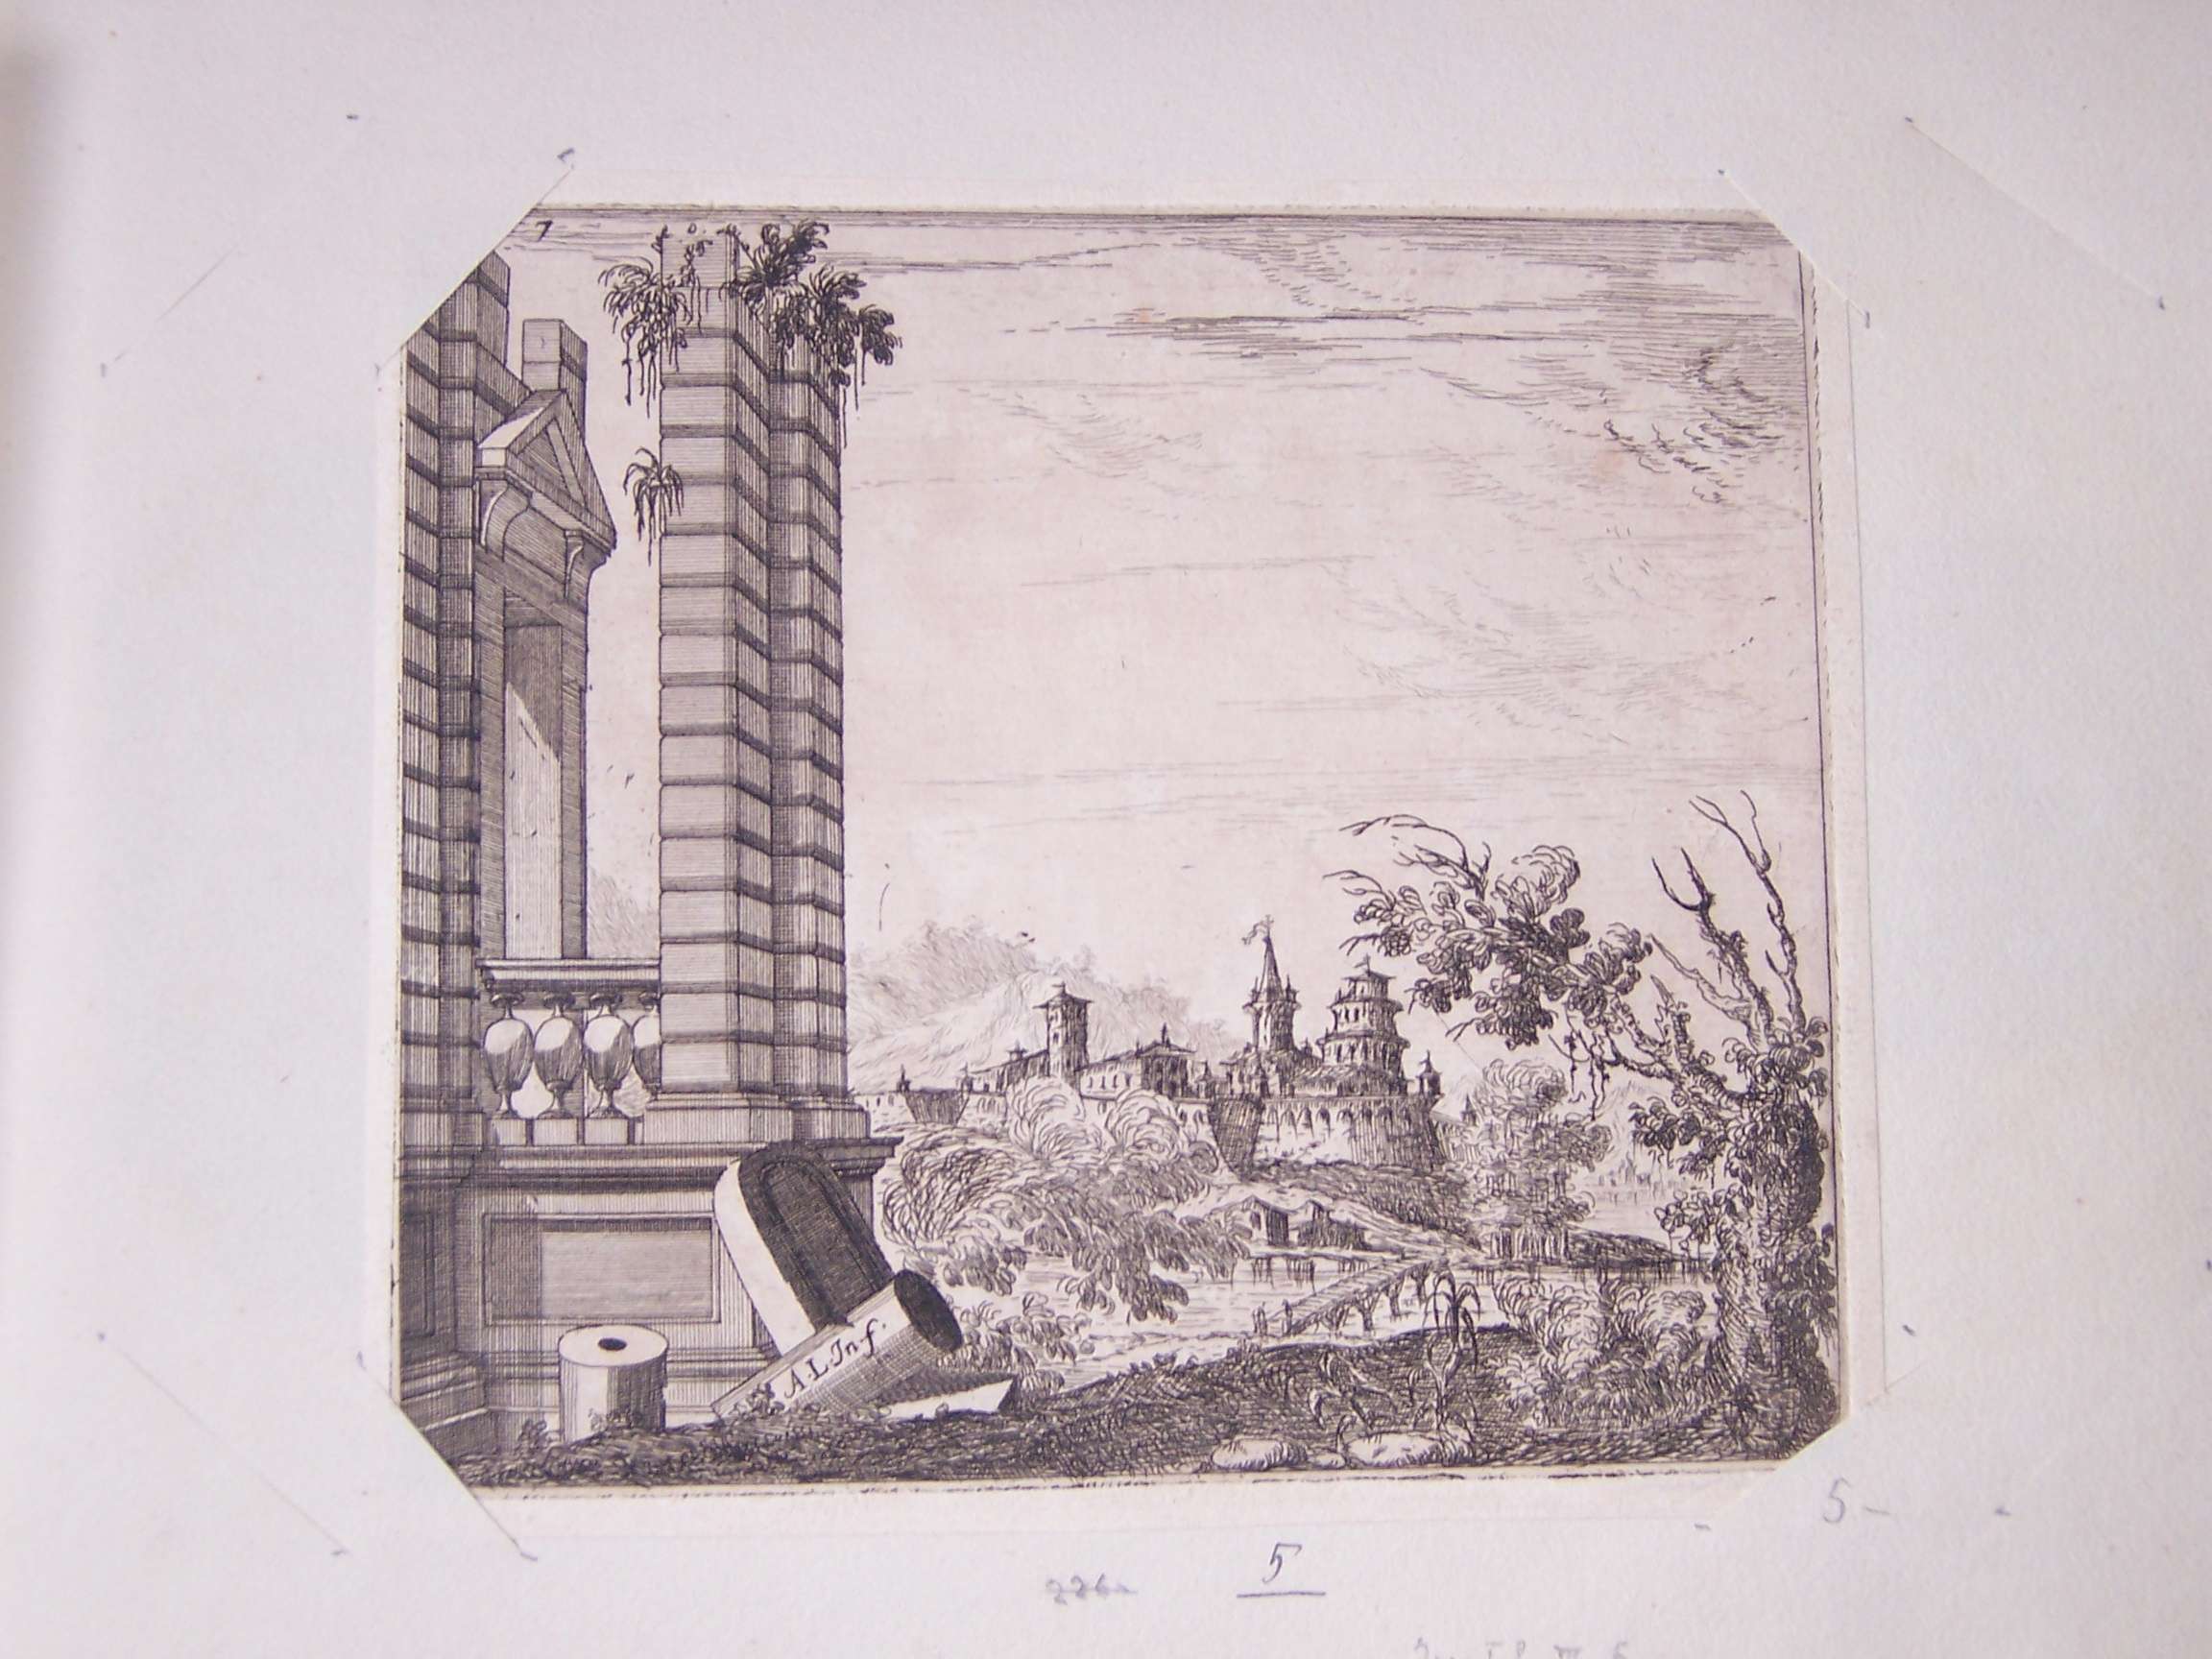 architettura illusionistica (stampa) di Landi Antonio (sec. XVIII)